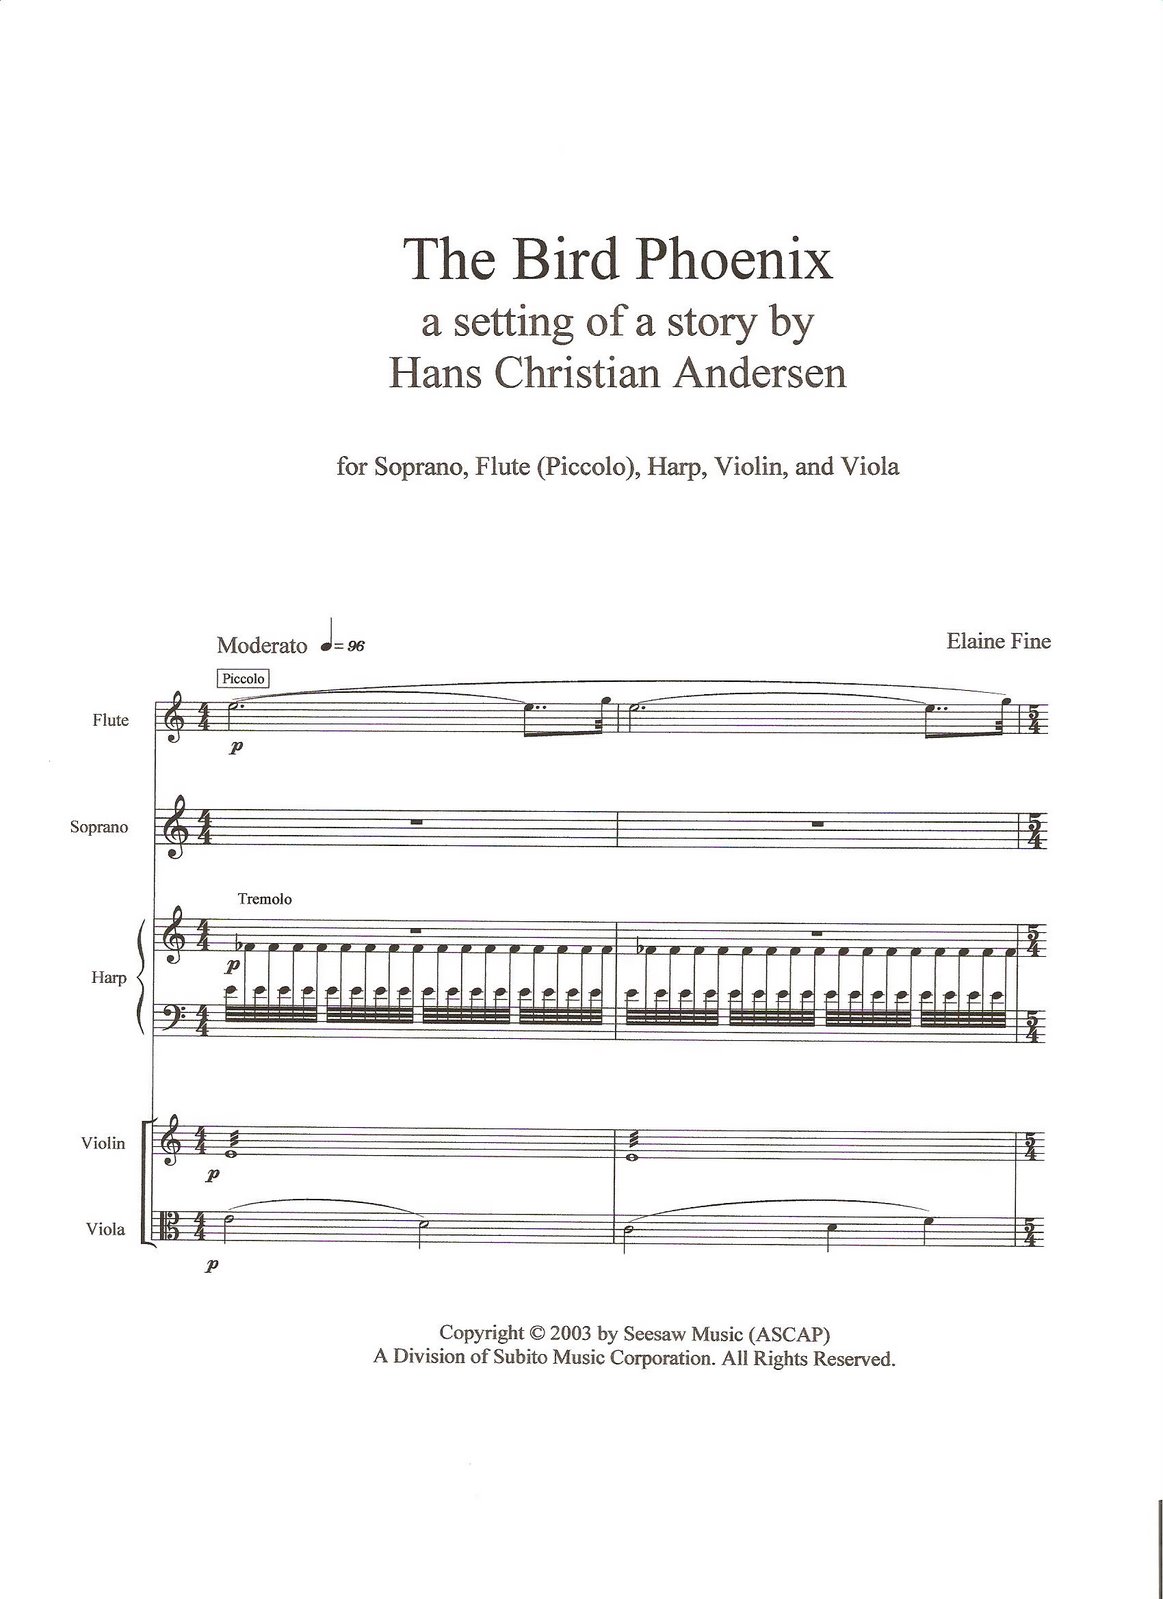 [The+Bird+Phoenix.jpg]